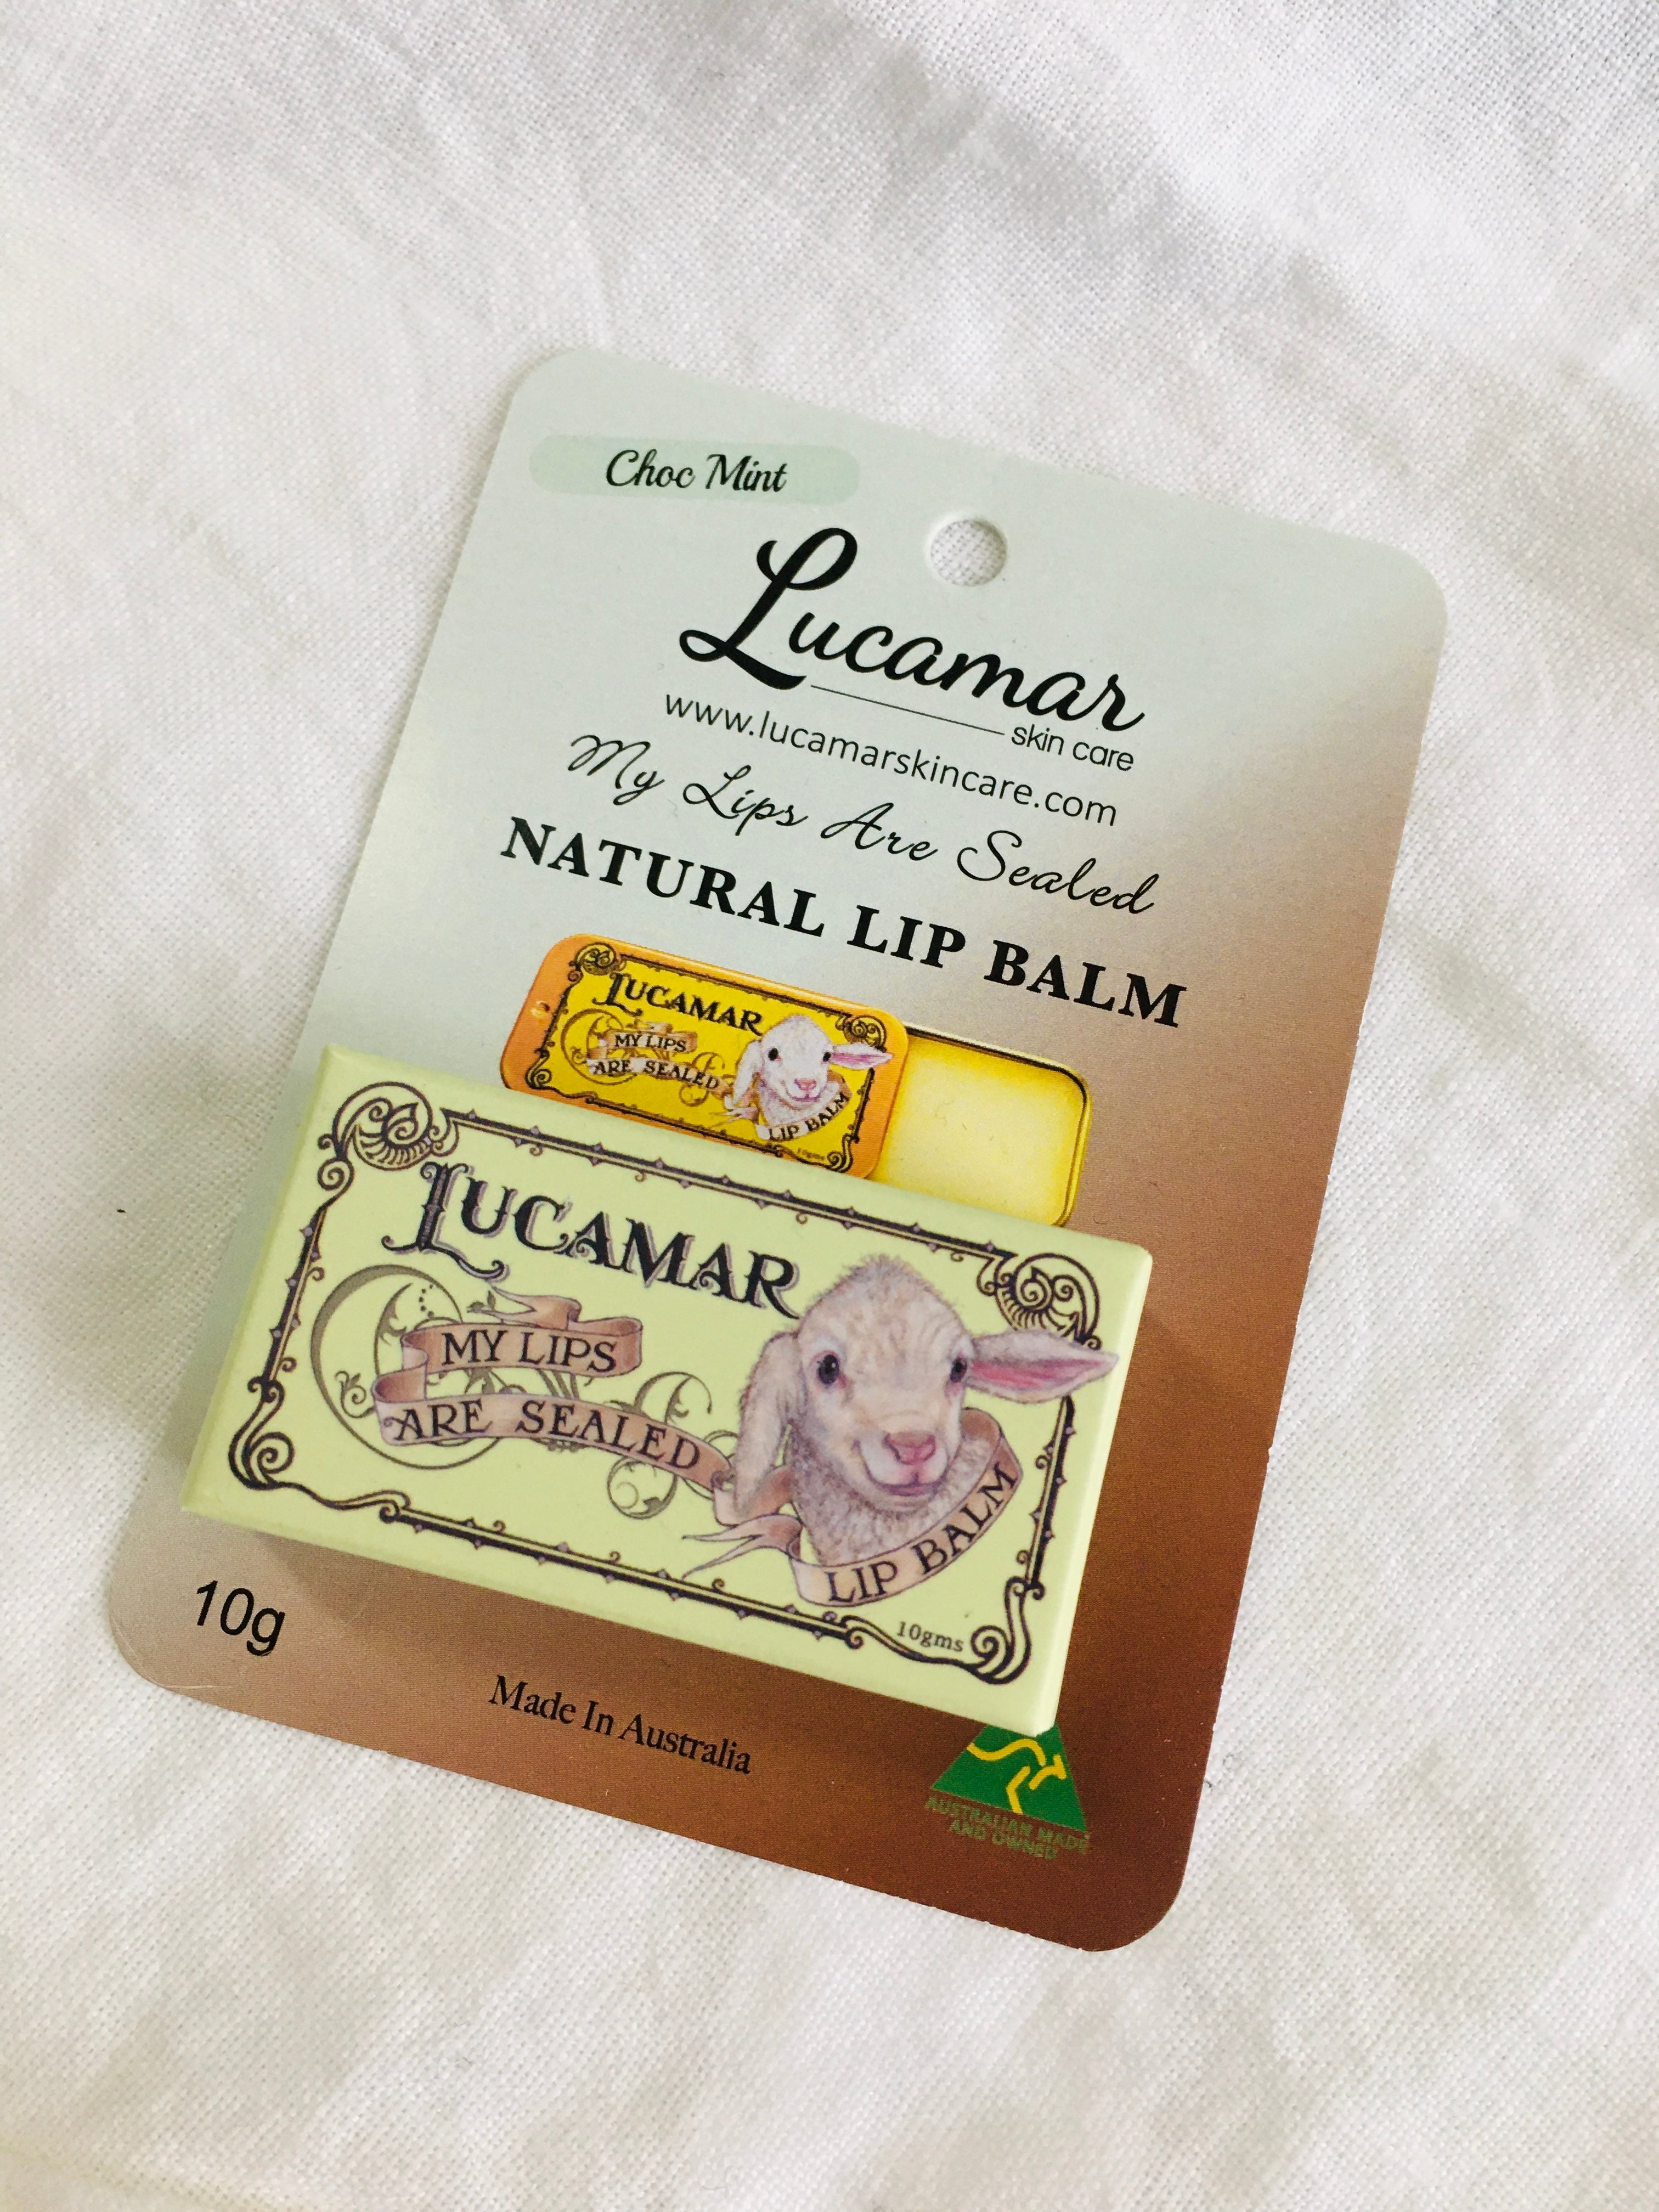 Lucamar - Natural Lip Balms Skin Care Lucamar Skin Care Chocmint 